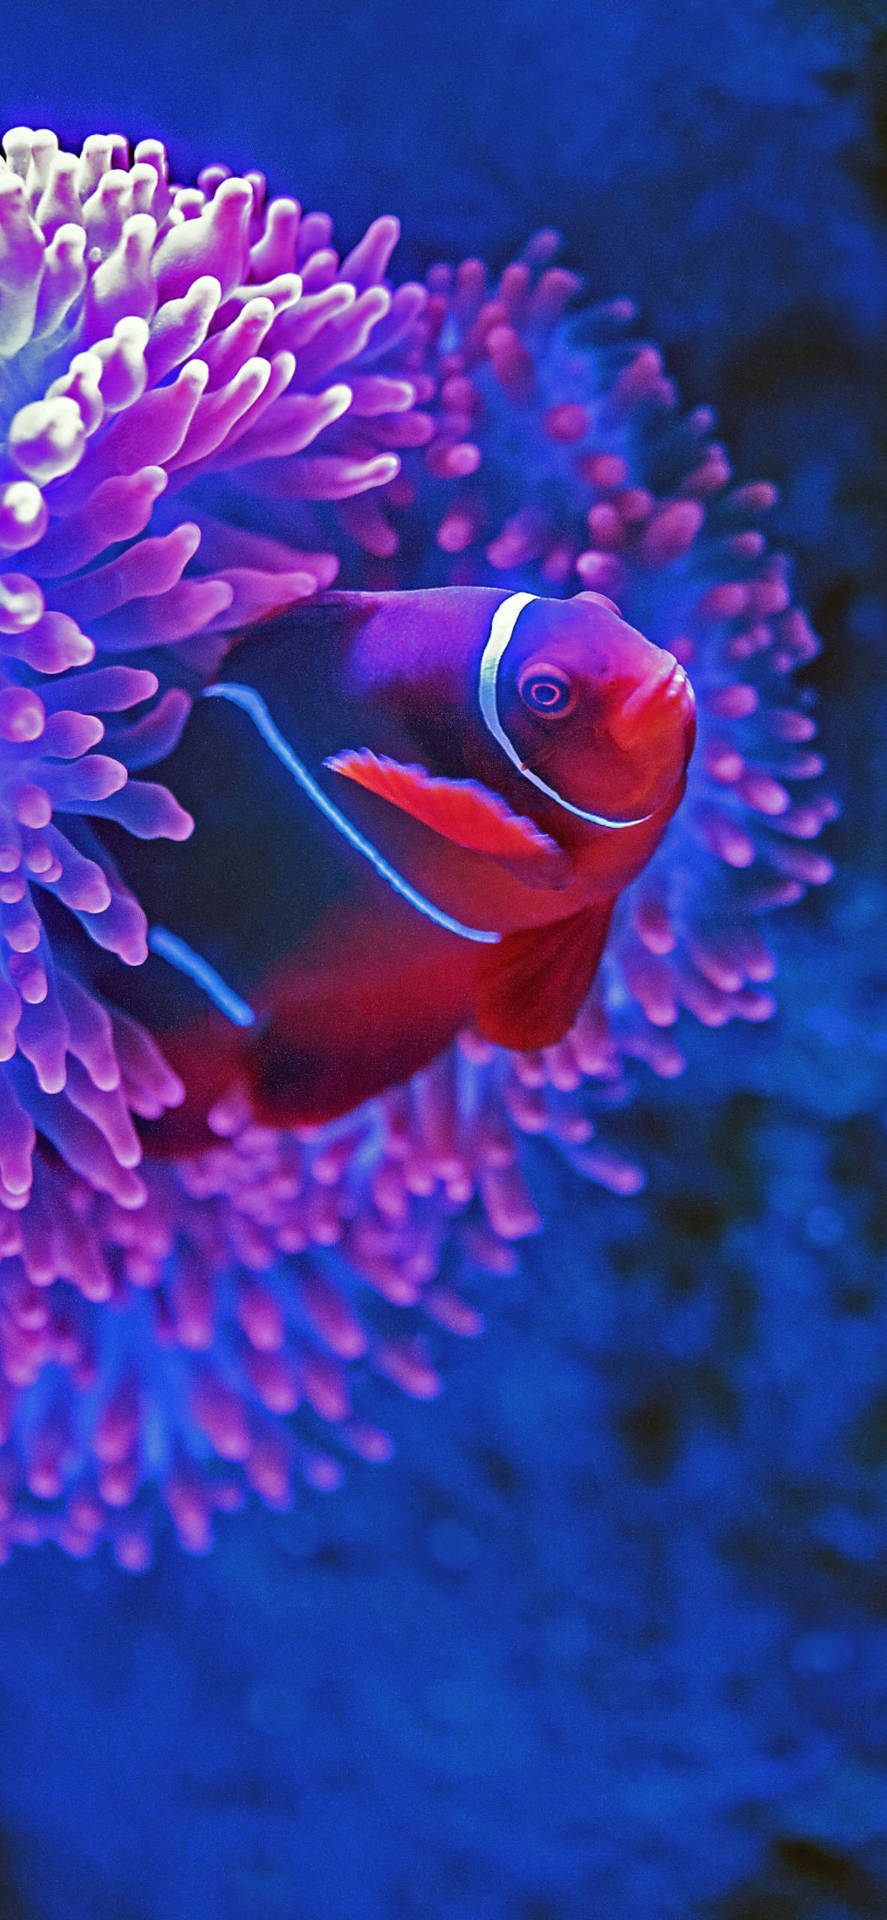 Clownfish Eggs Images - Free Download on Freepik